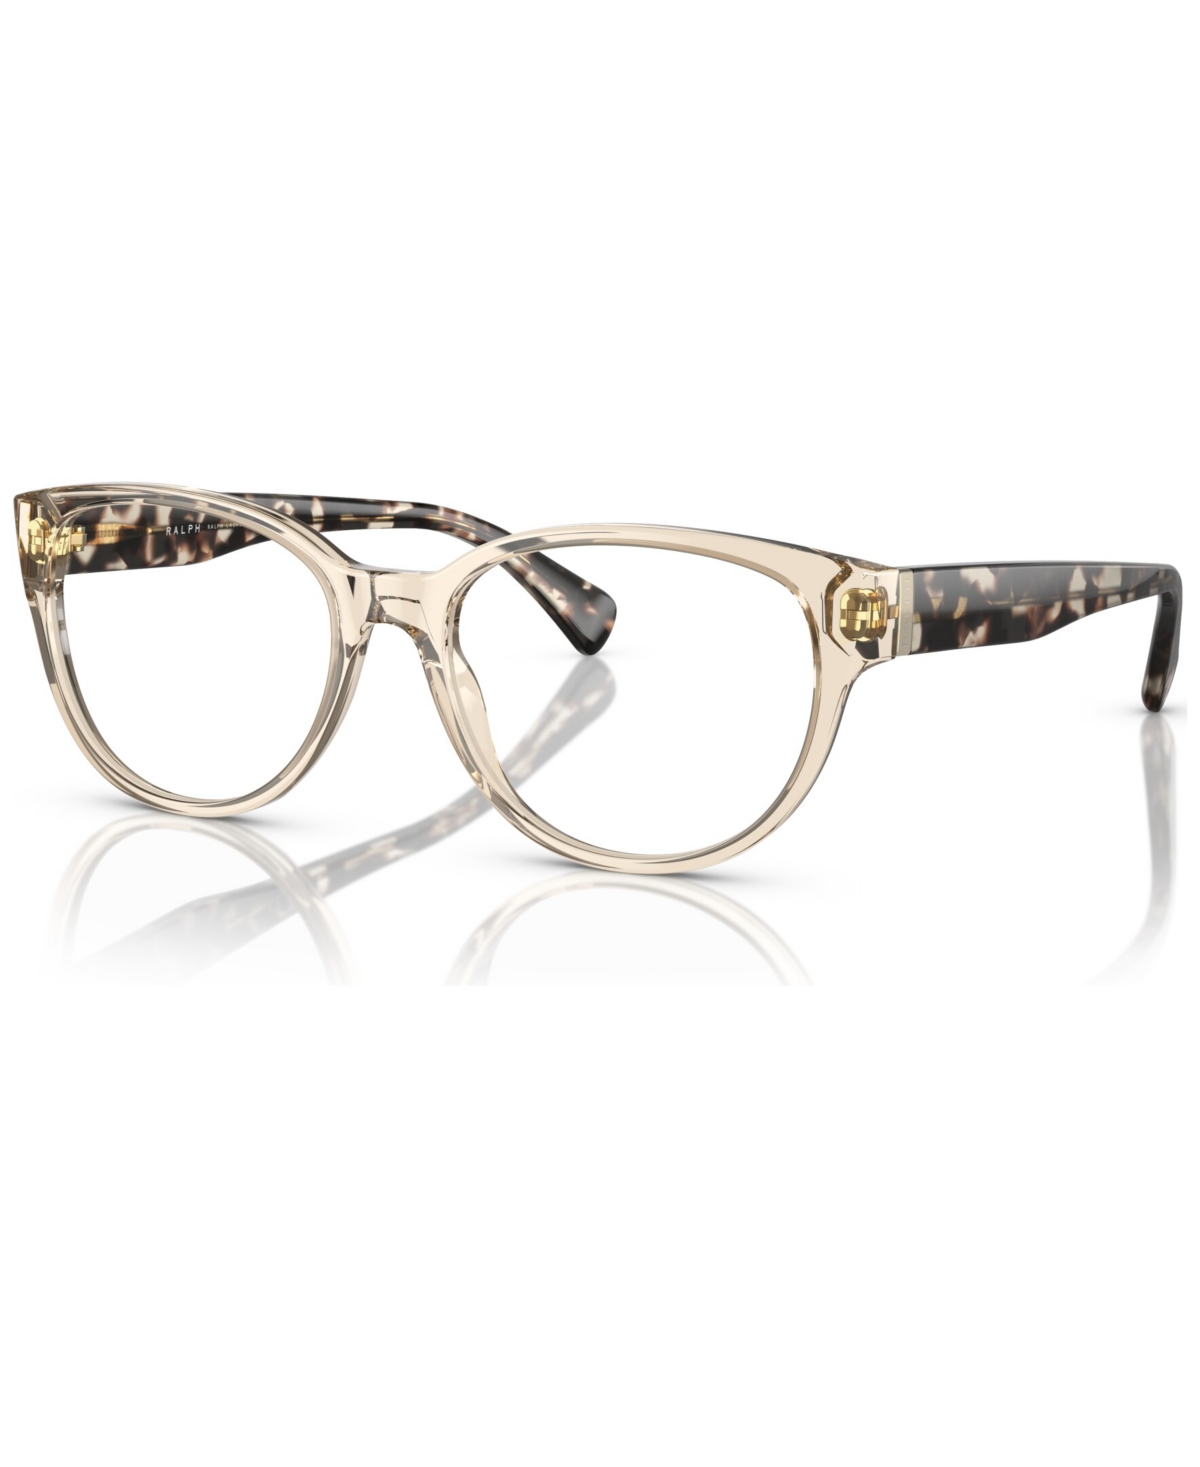 Women's Oval Eyeglasses, RA7151 52 - Shiny Transparent Light Brown